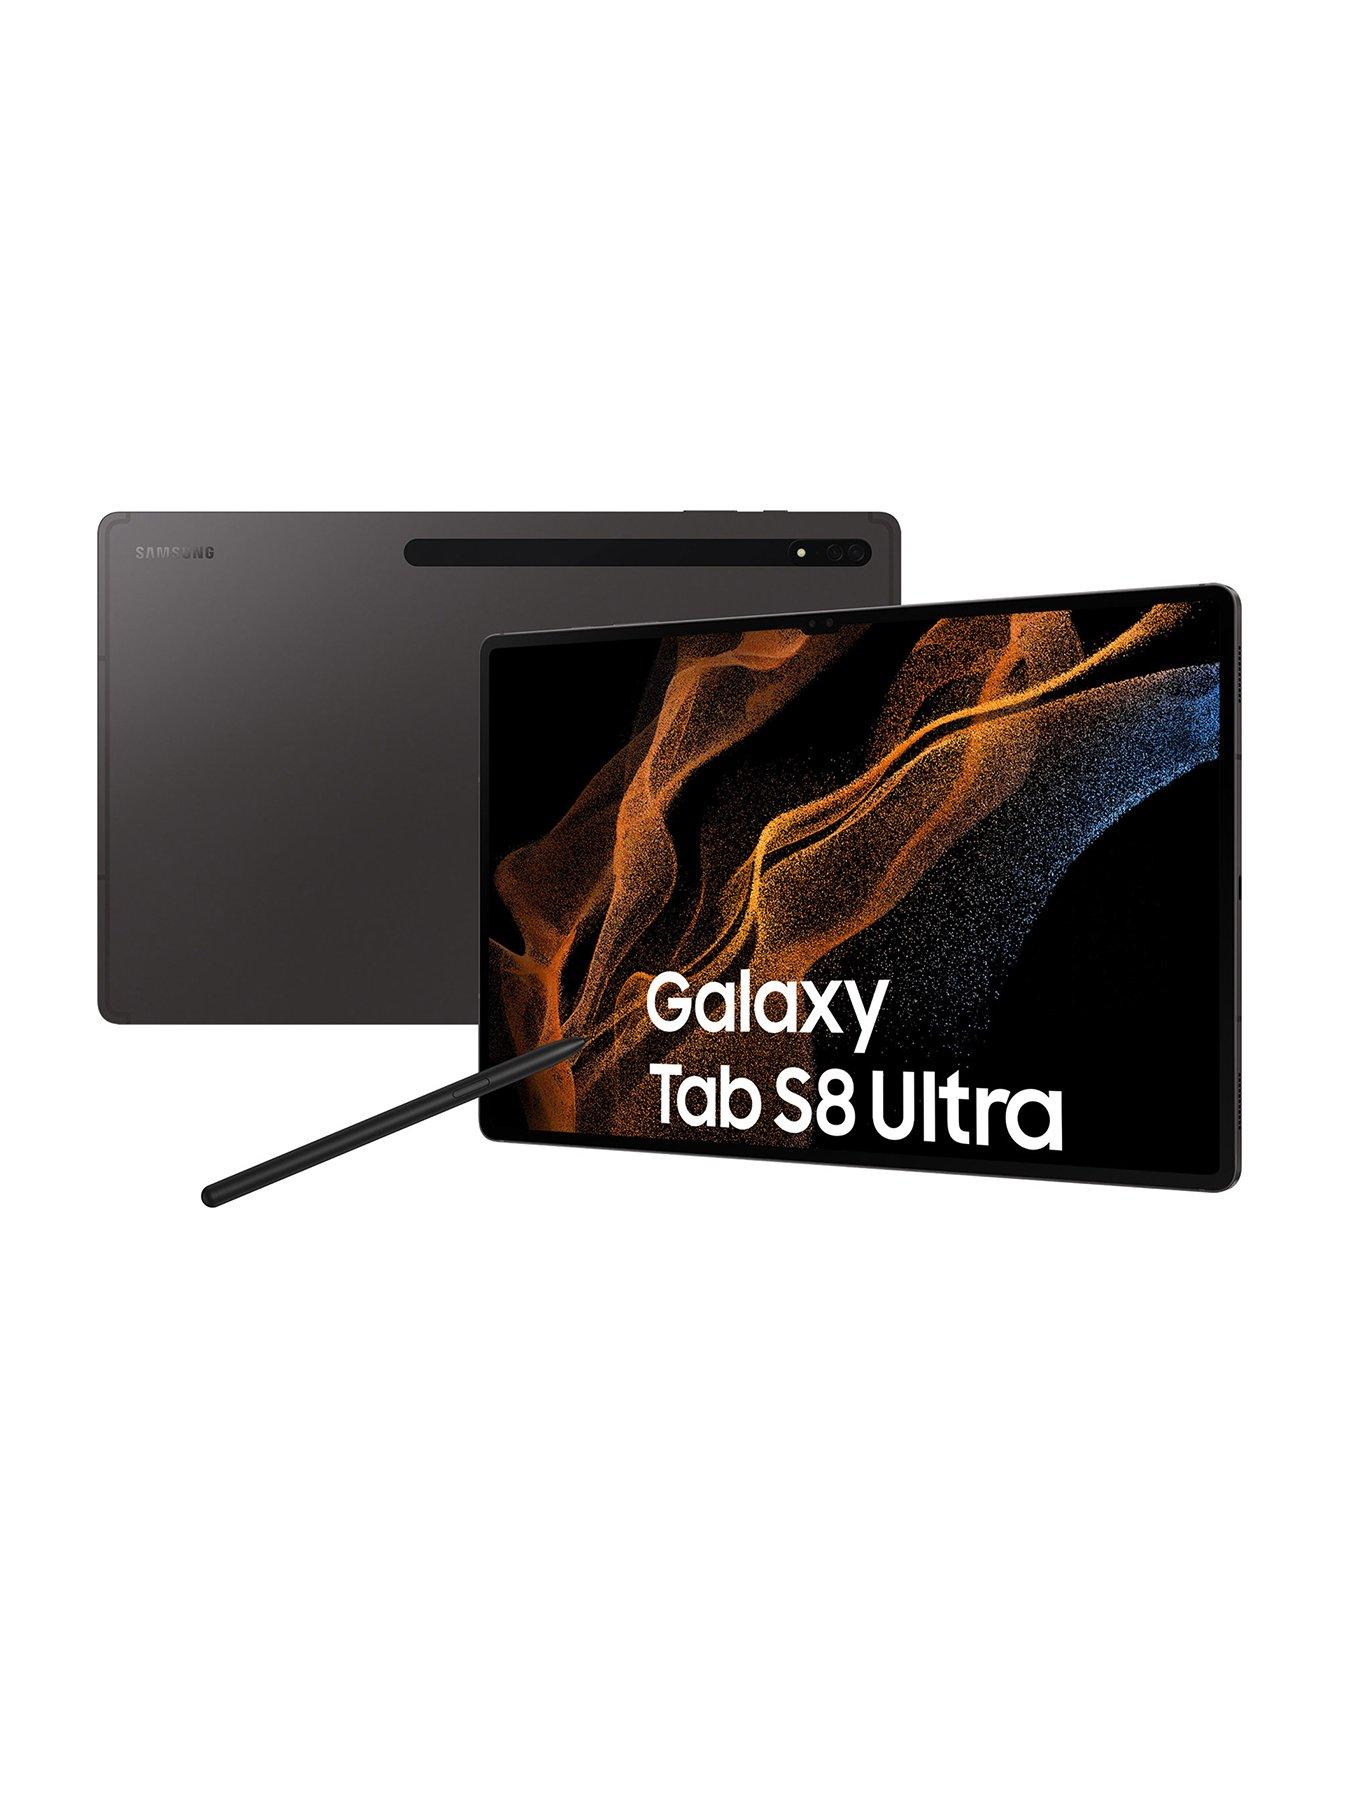 Samsung Galaxy Tab S8 Ultra 14.6 inch, 5G, 256GB - Graphite | very 